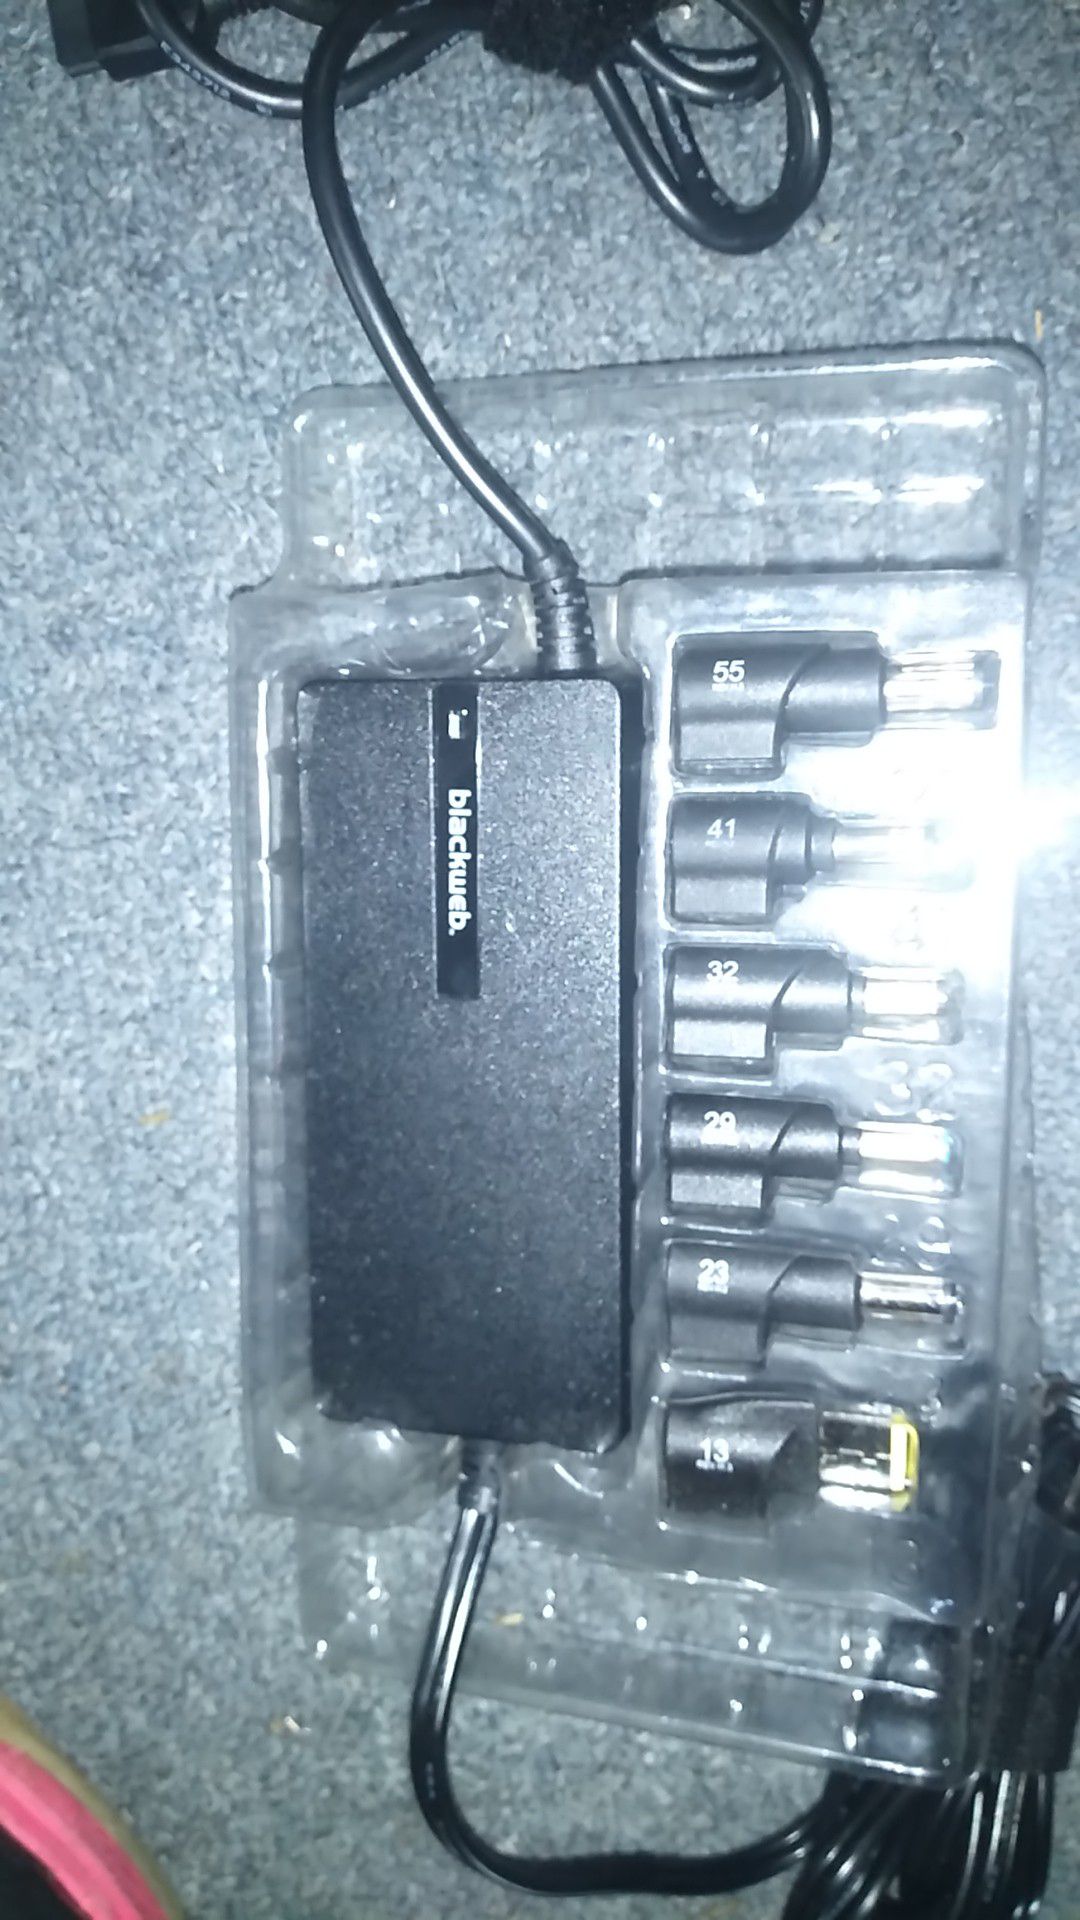 Blackweb universal laptop charger